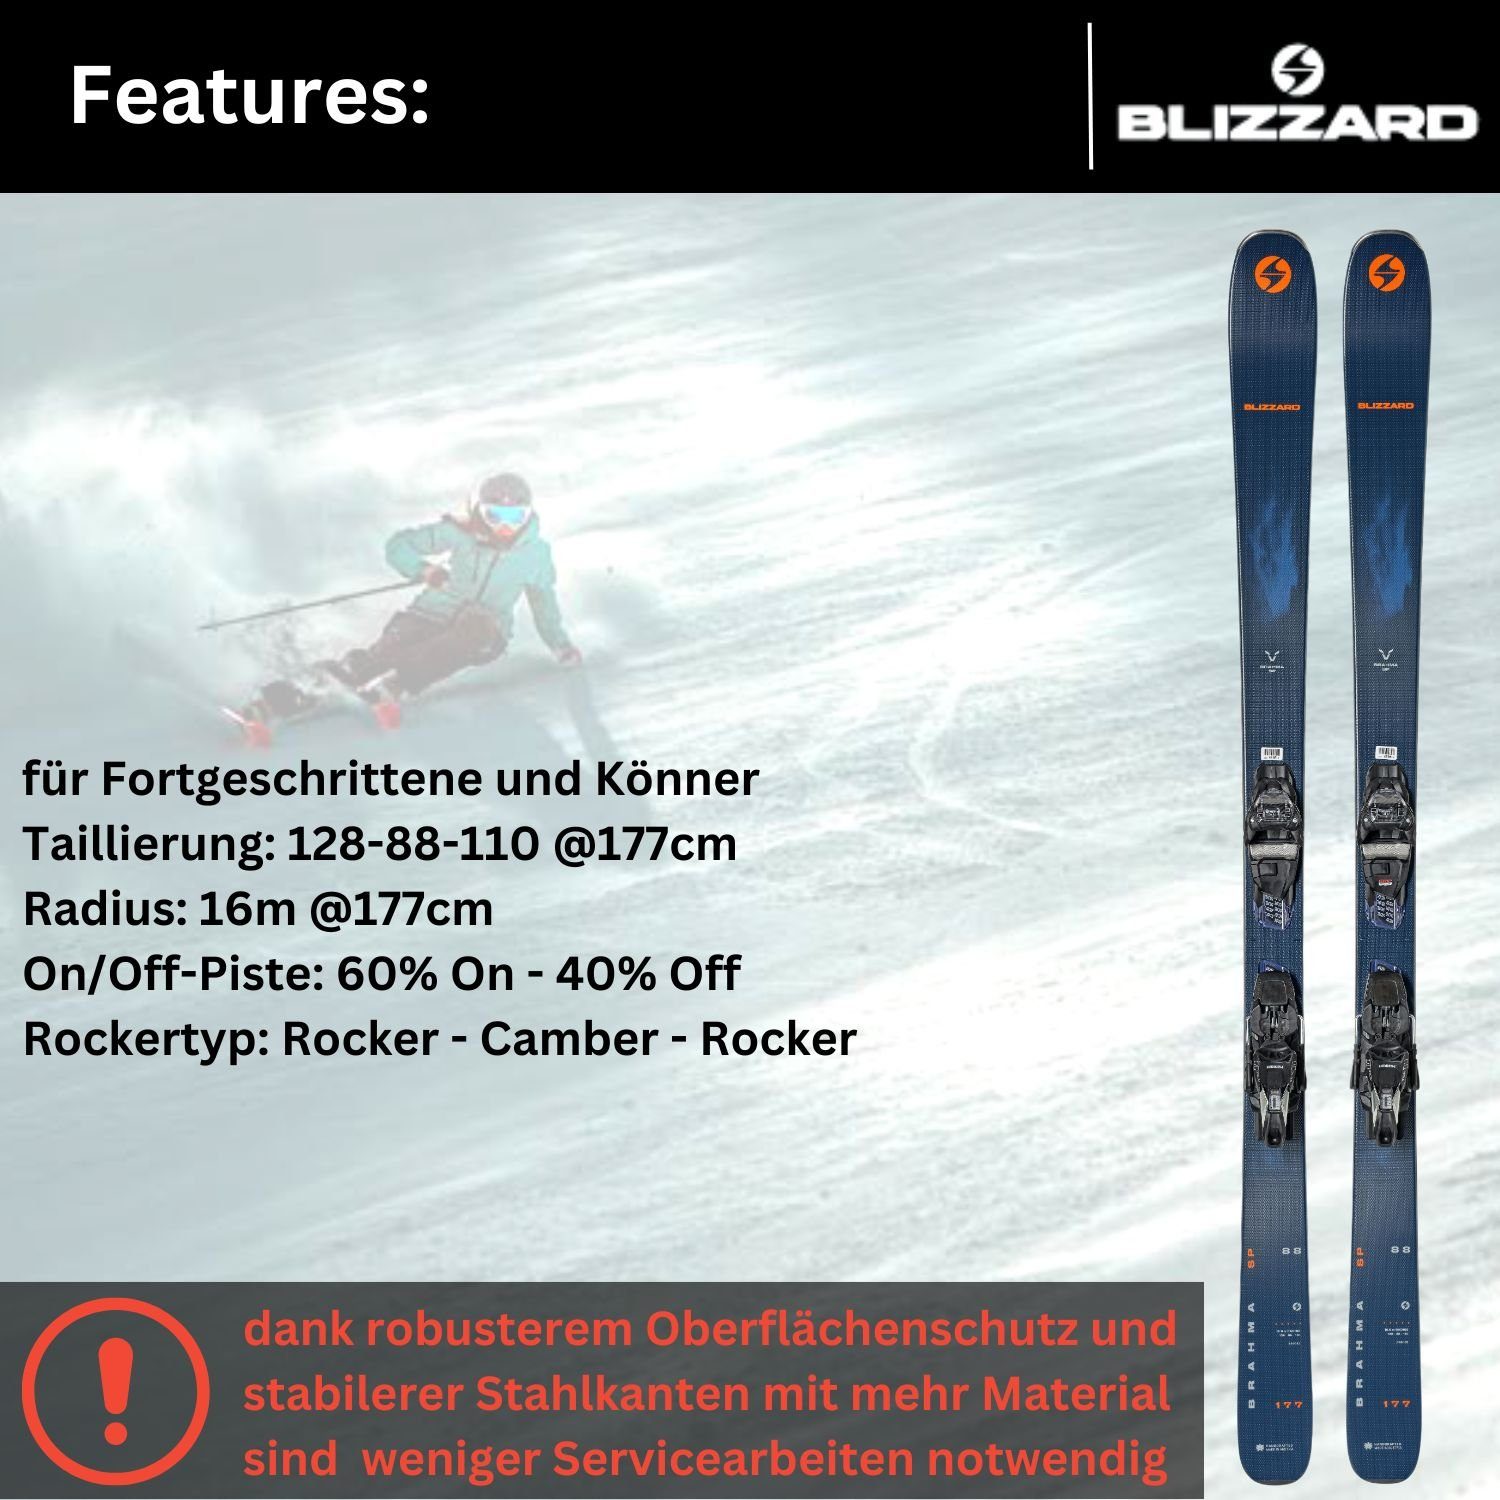 11 Camber BLIZZARD Marker Ski, Brahma 88 Rocker Blizzard Ski TCX + Z3-11 Bindung